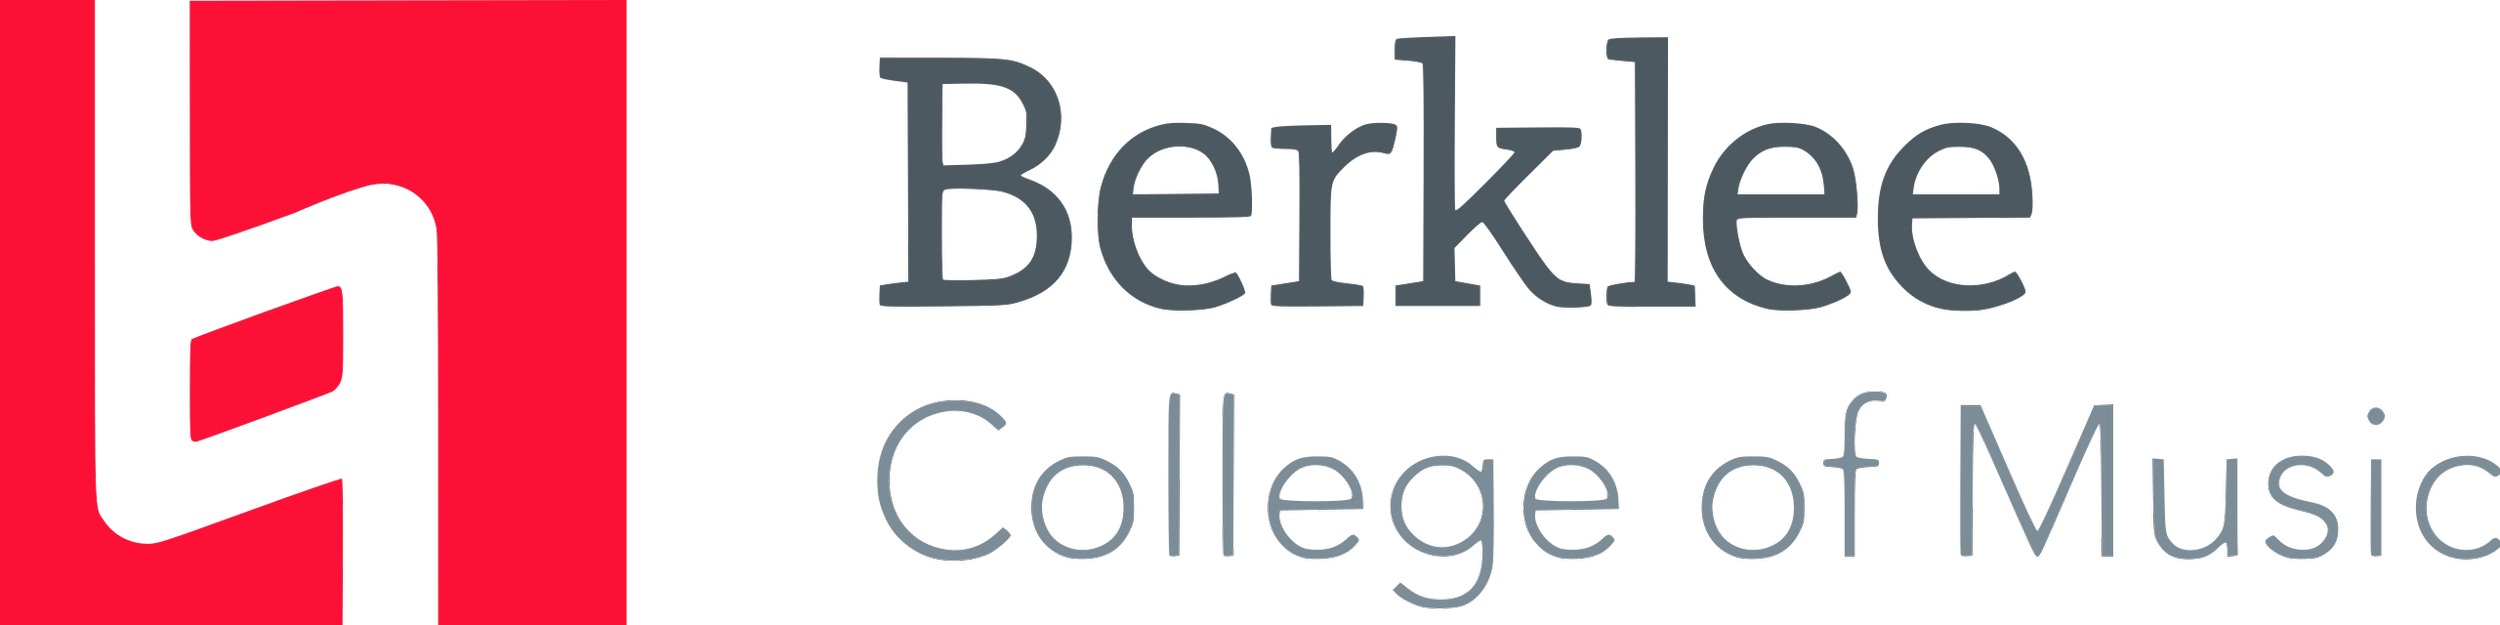 Berklee_College_of_Music_logo_and_wordmark.svg.png